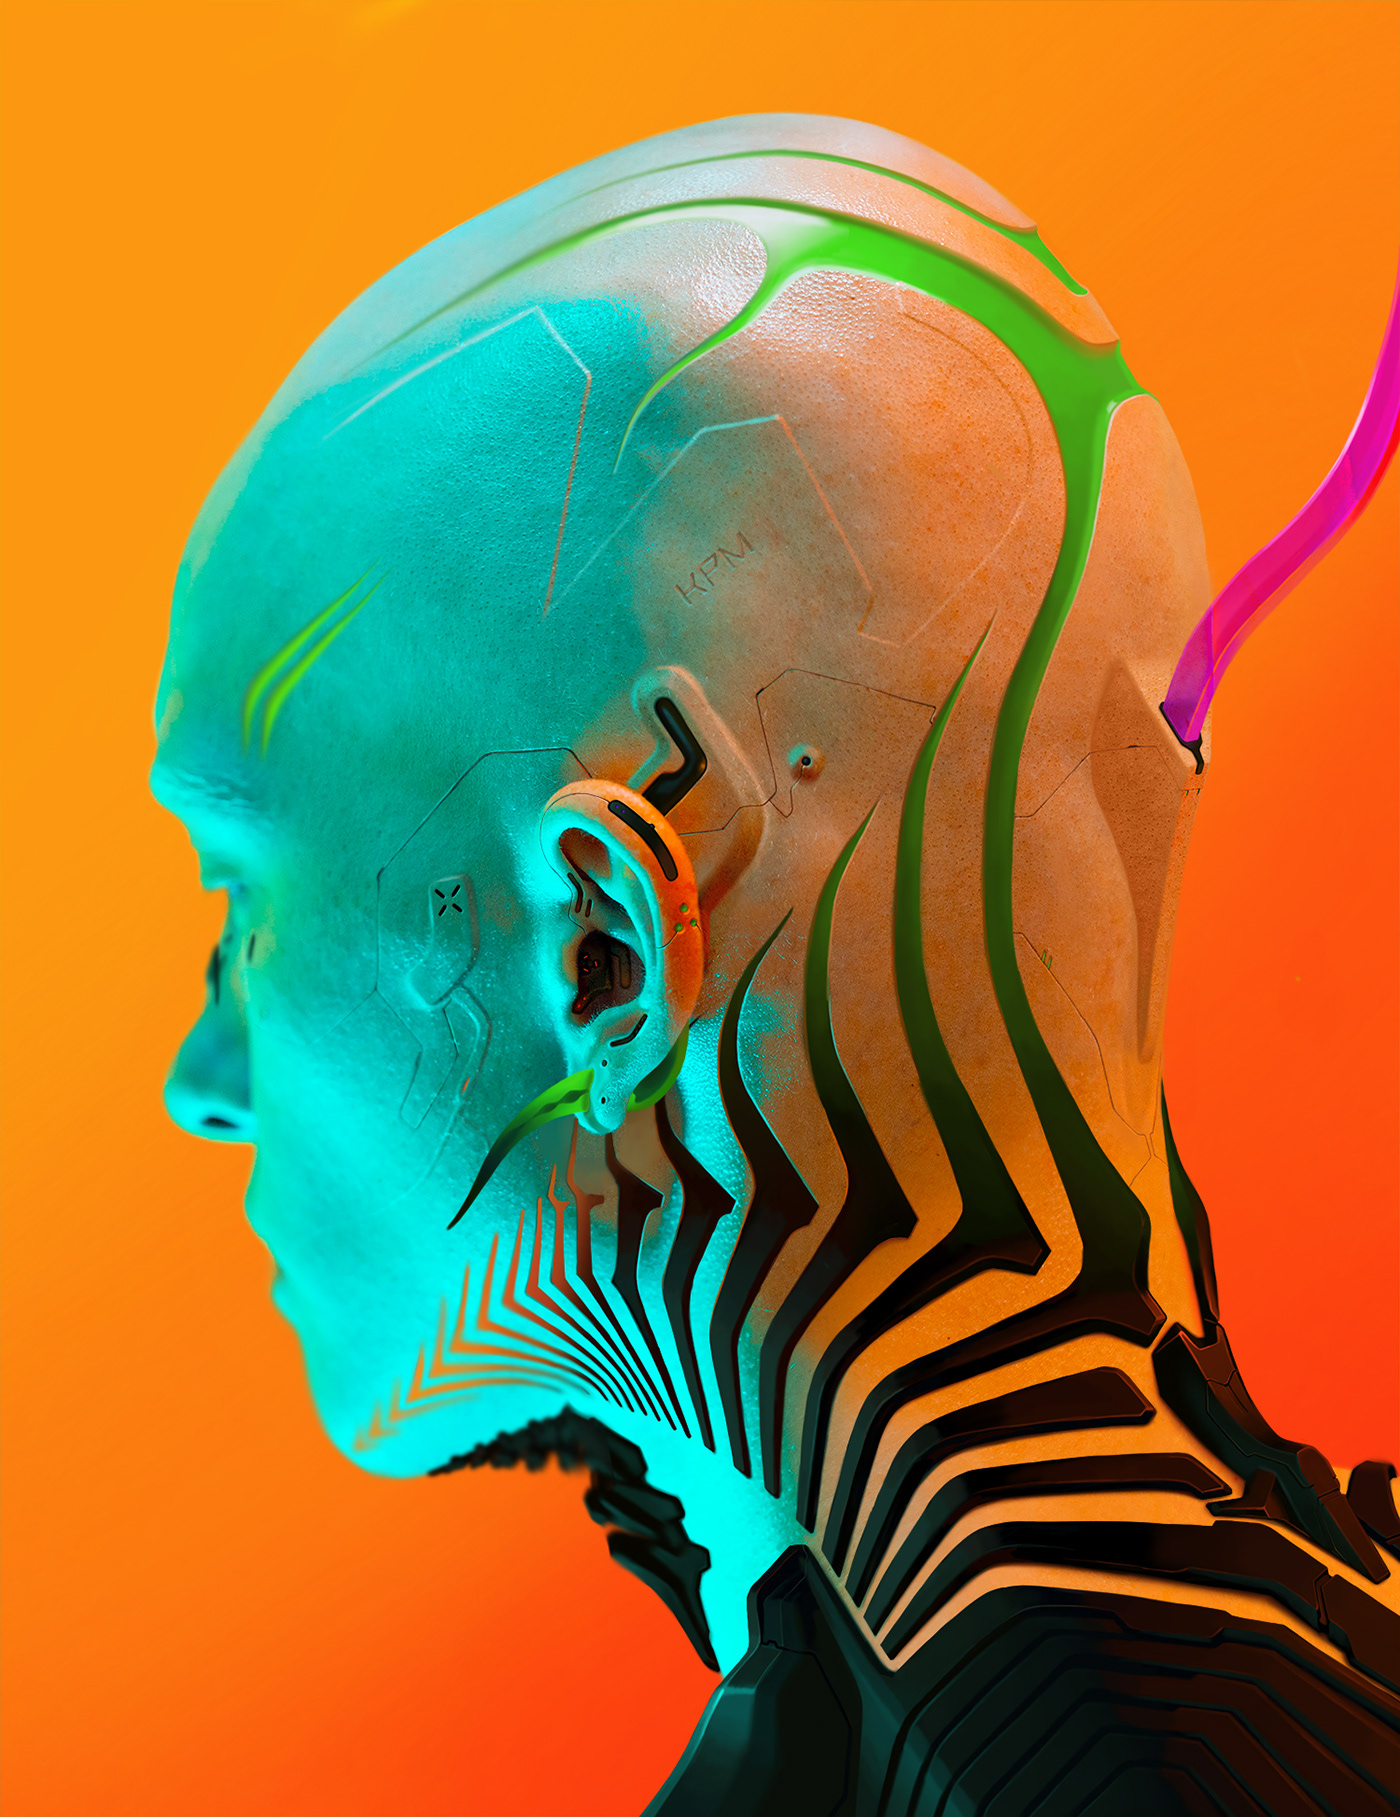 Cyberpunk robot future neon glow Technology Editing  upgrade mech ghotic